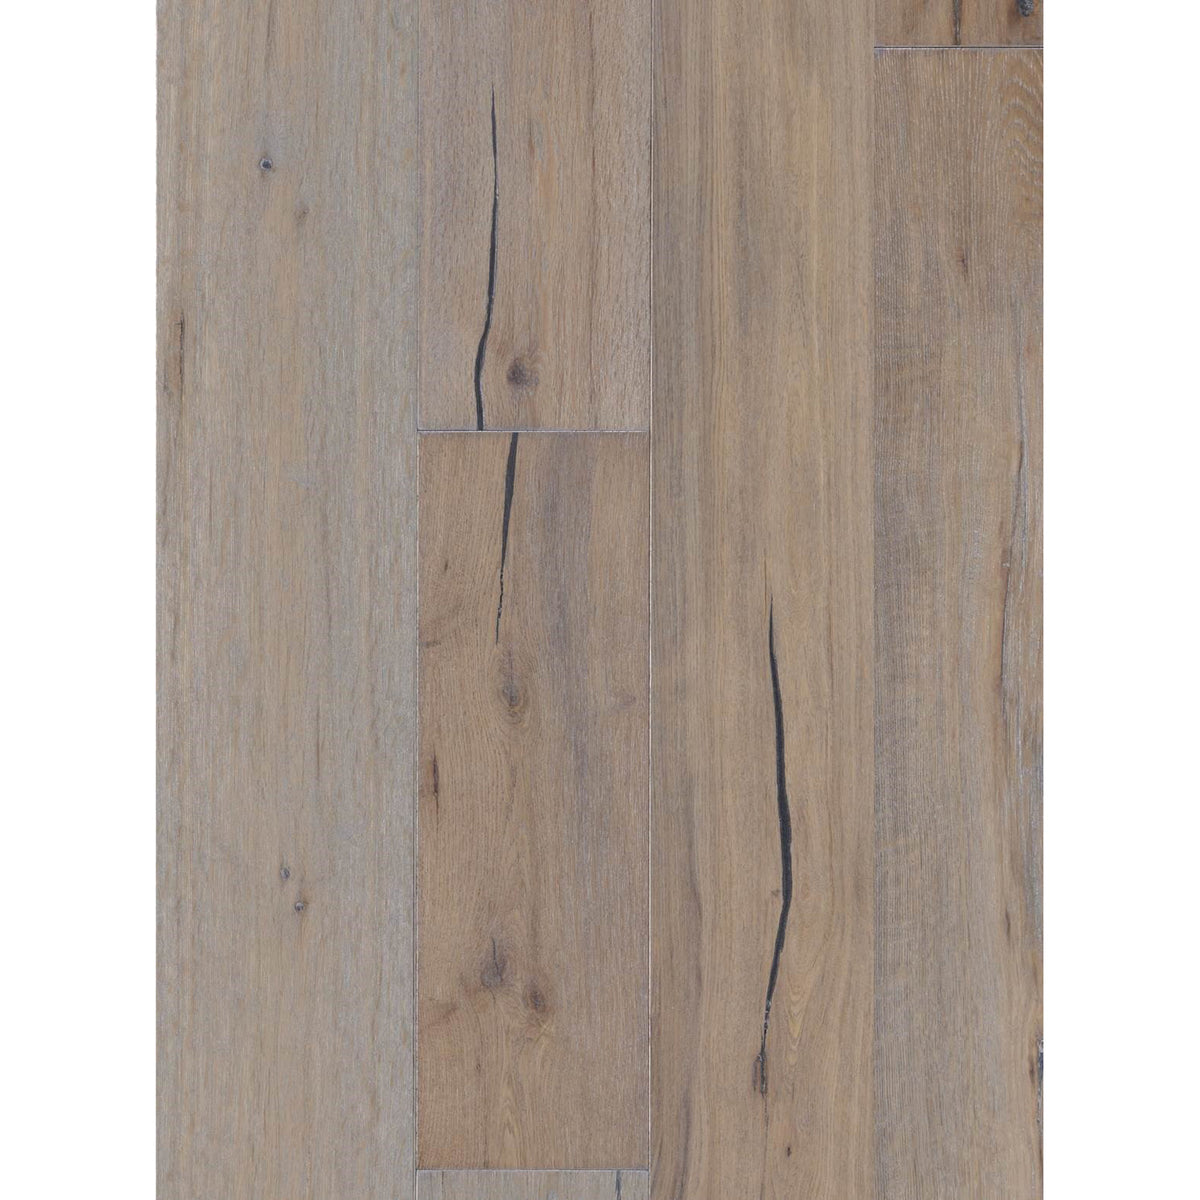 LM Flooring - The Glenn Collection - Silverton White Oak